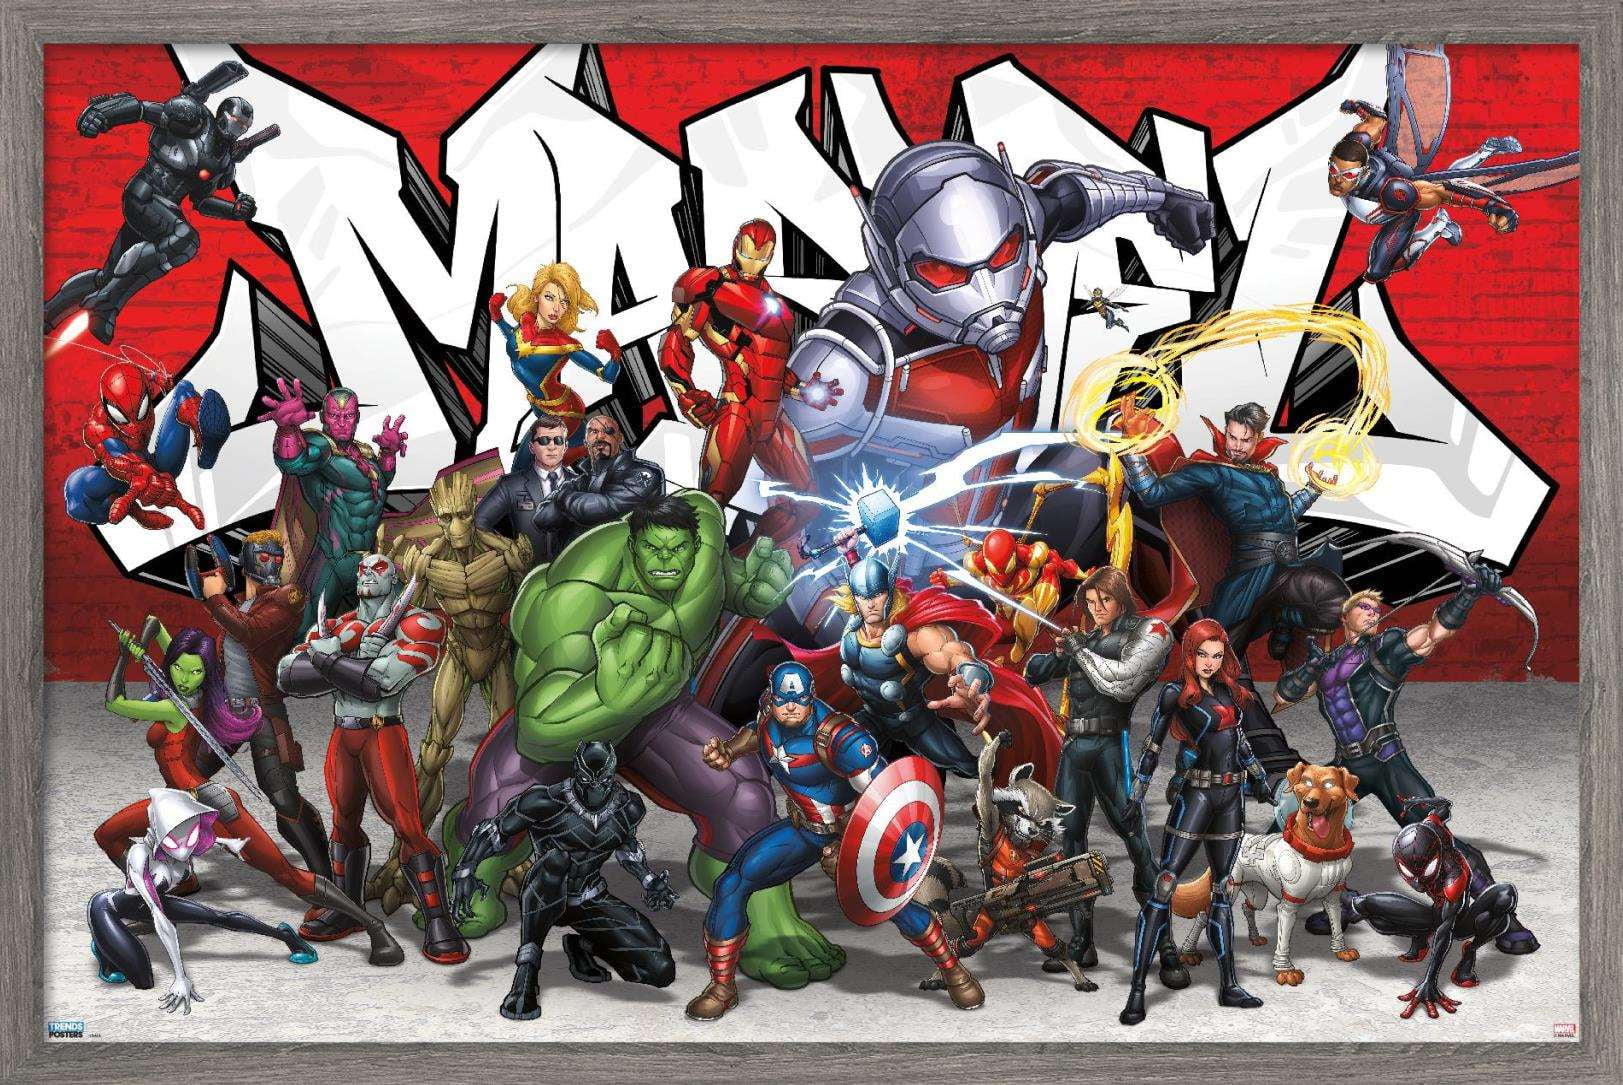 Marvel Avengers: The Kang Dynasty - Logo Wall Poster, 14.725 x 22.375 